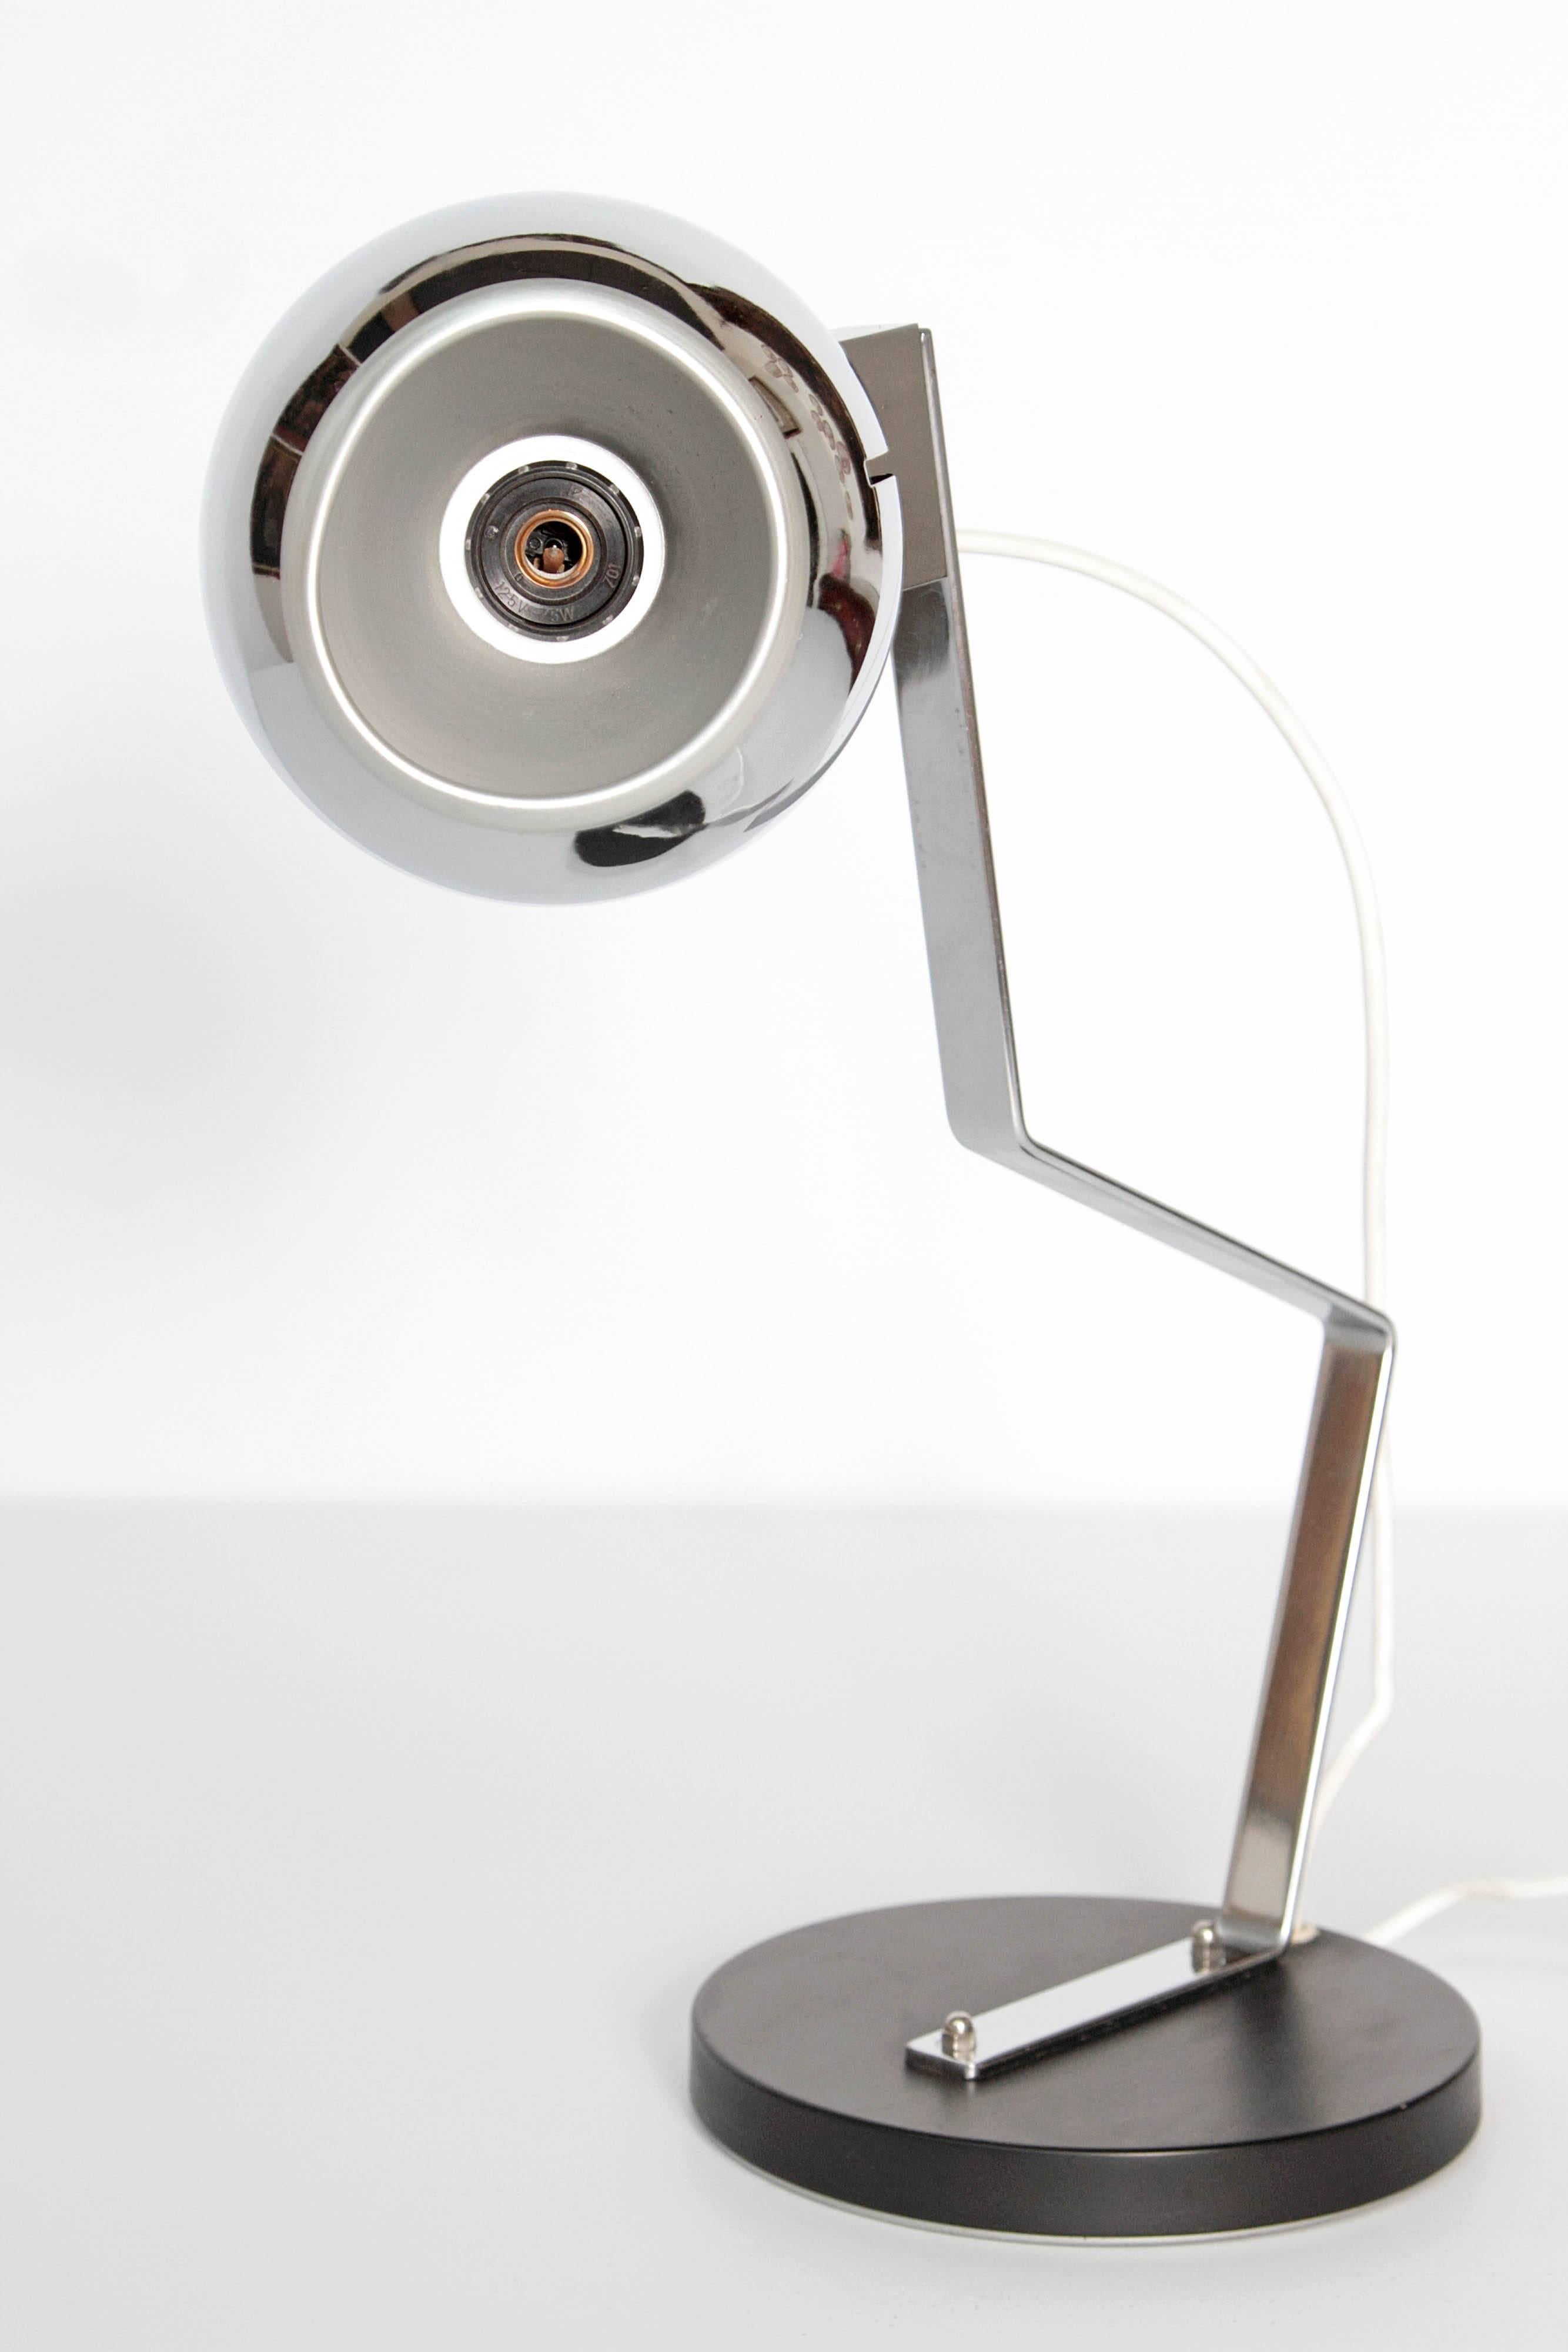 Chrome Mid-Century Modern Lamp by Mutual Sunset Lamp Company